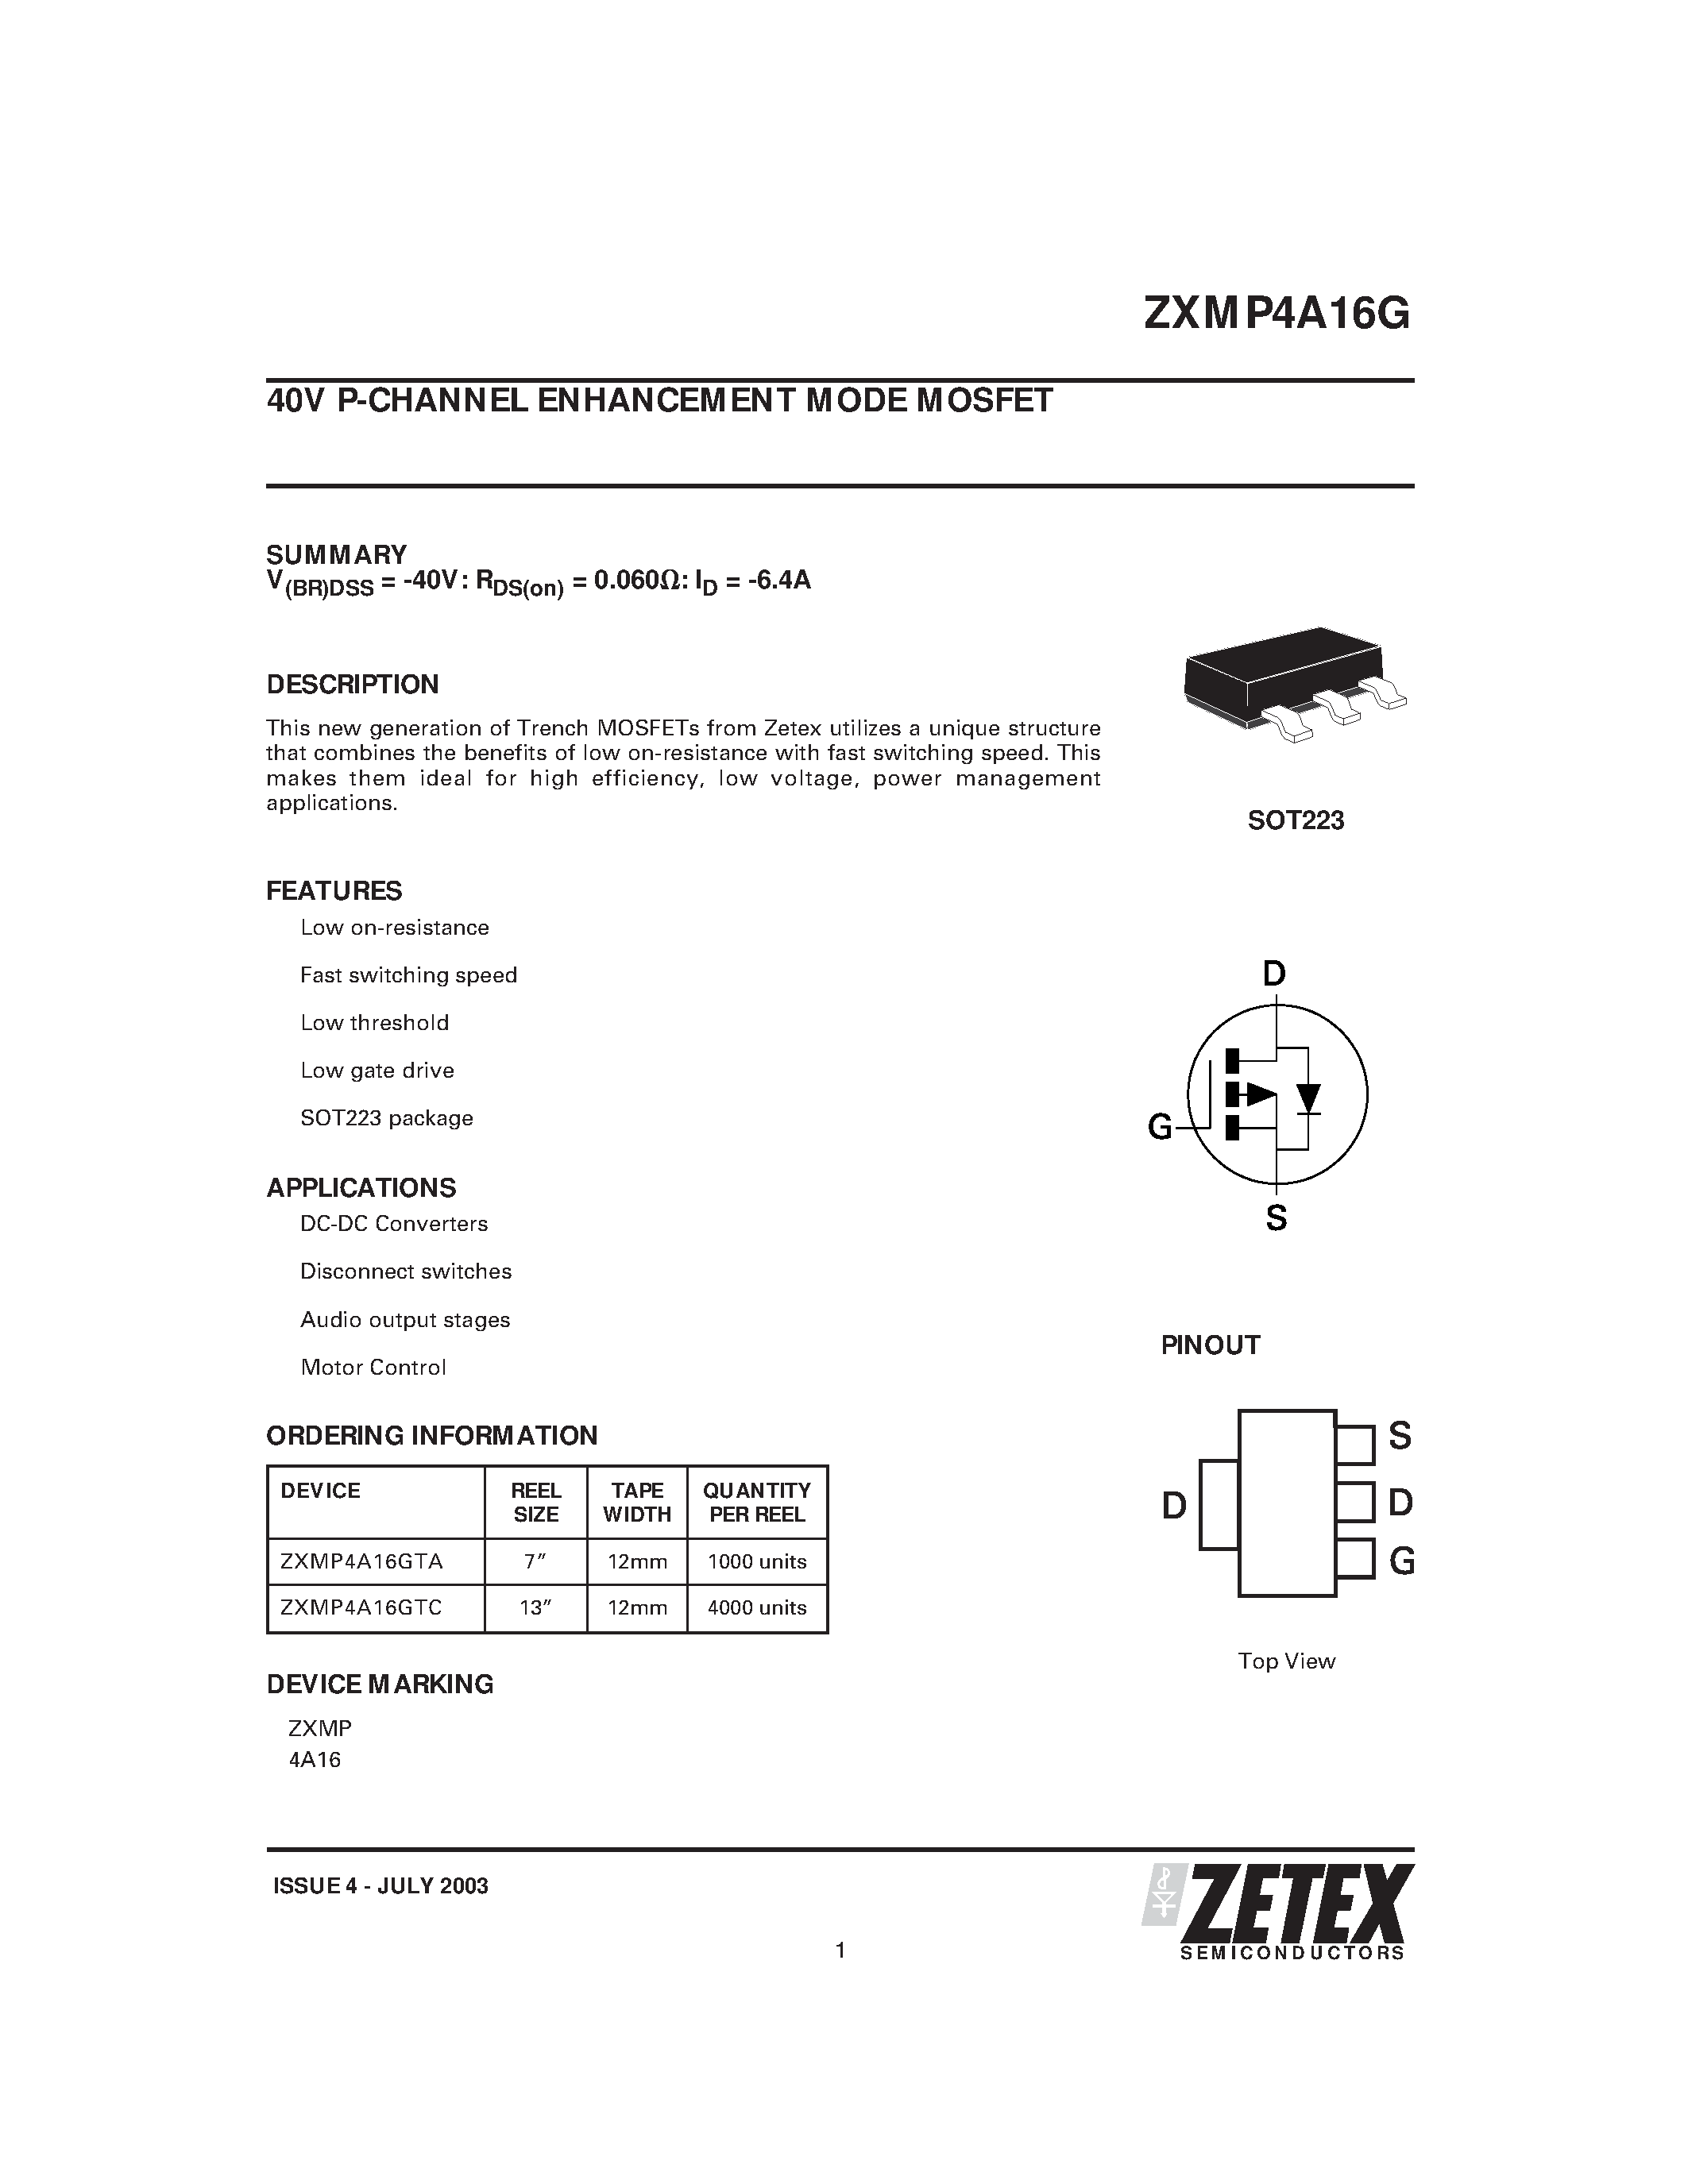 Даташит ZXMP4A16G - 40V P-CHANNEL ENHANCEMENT MODE MOSFET страница 1